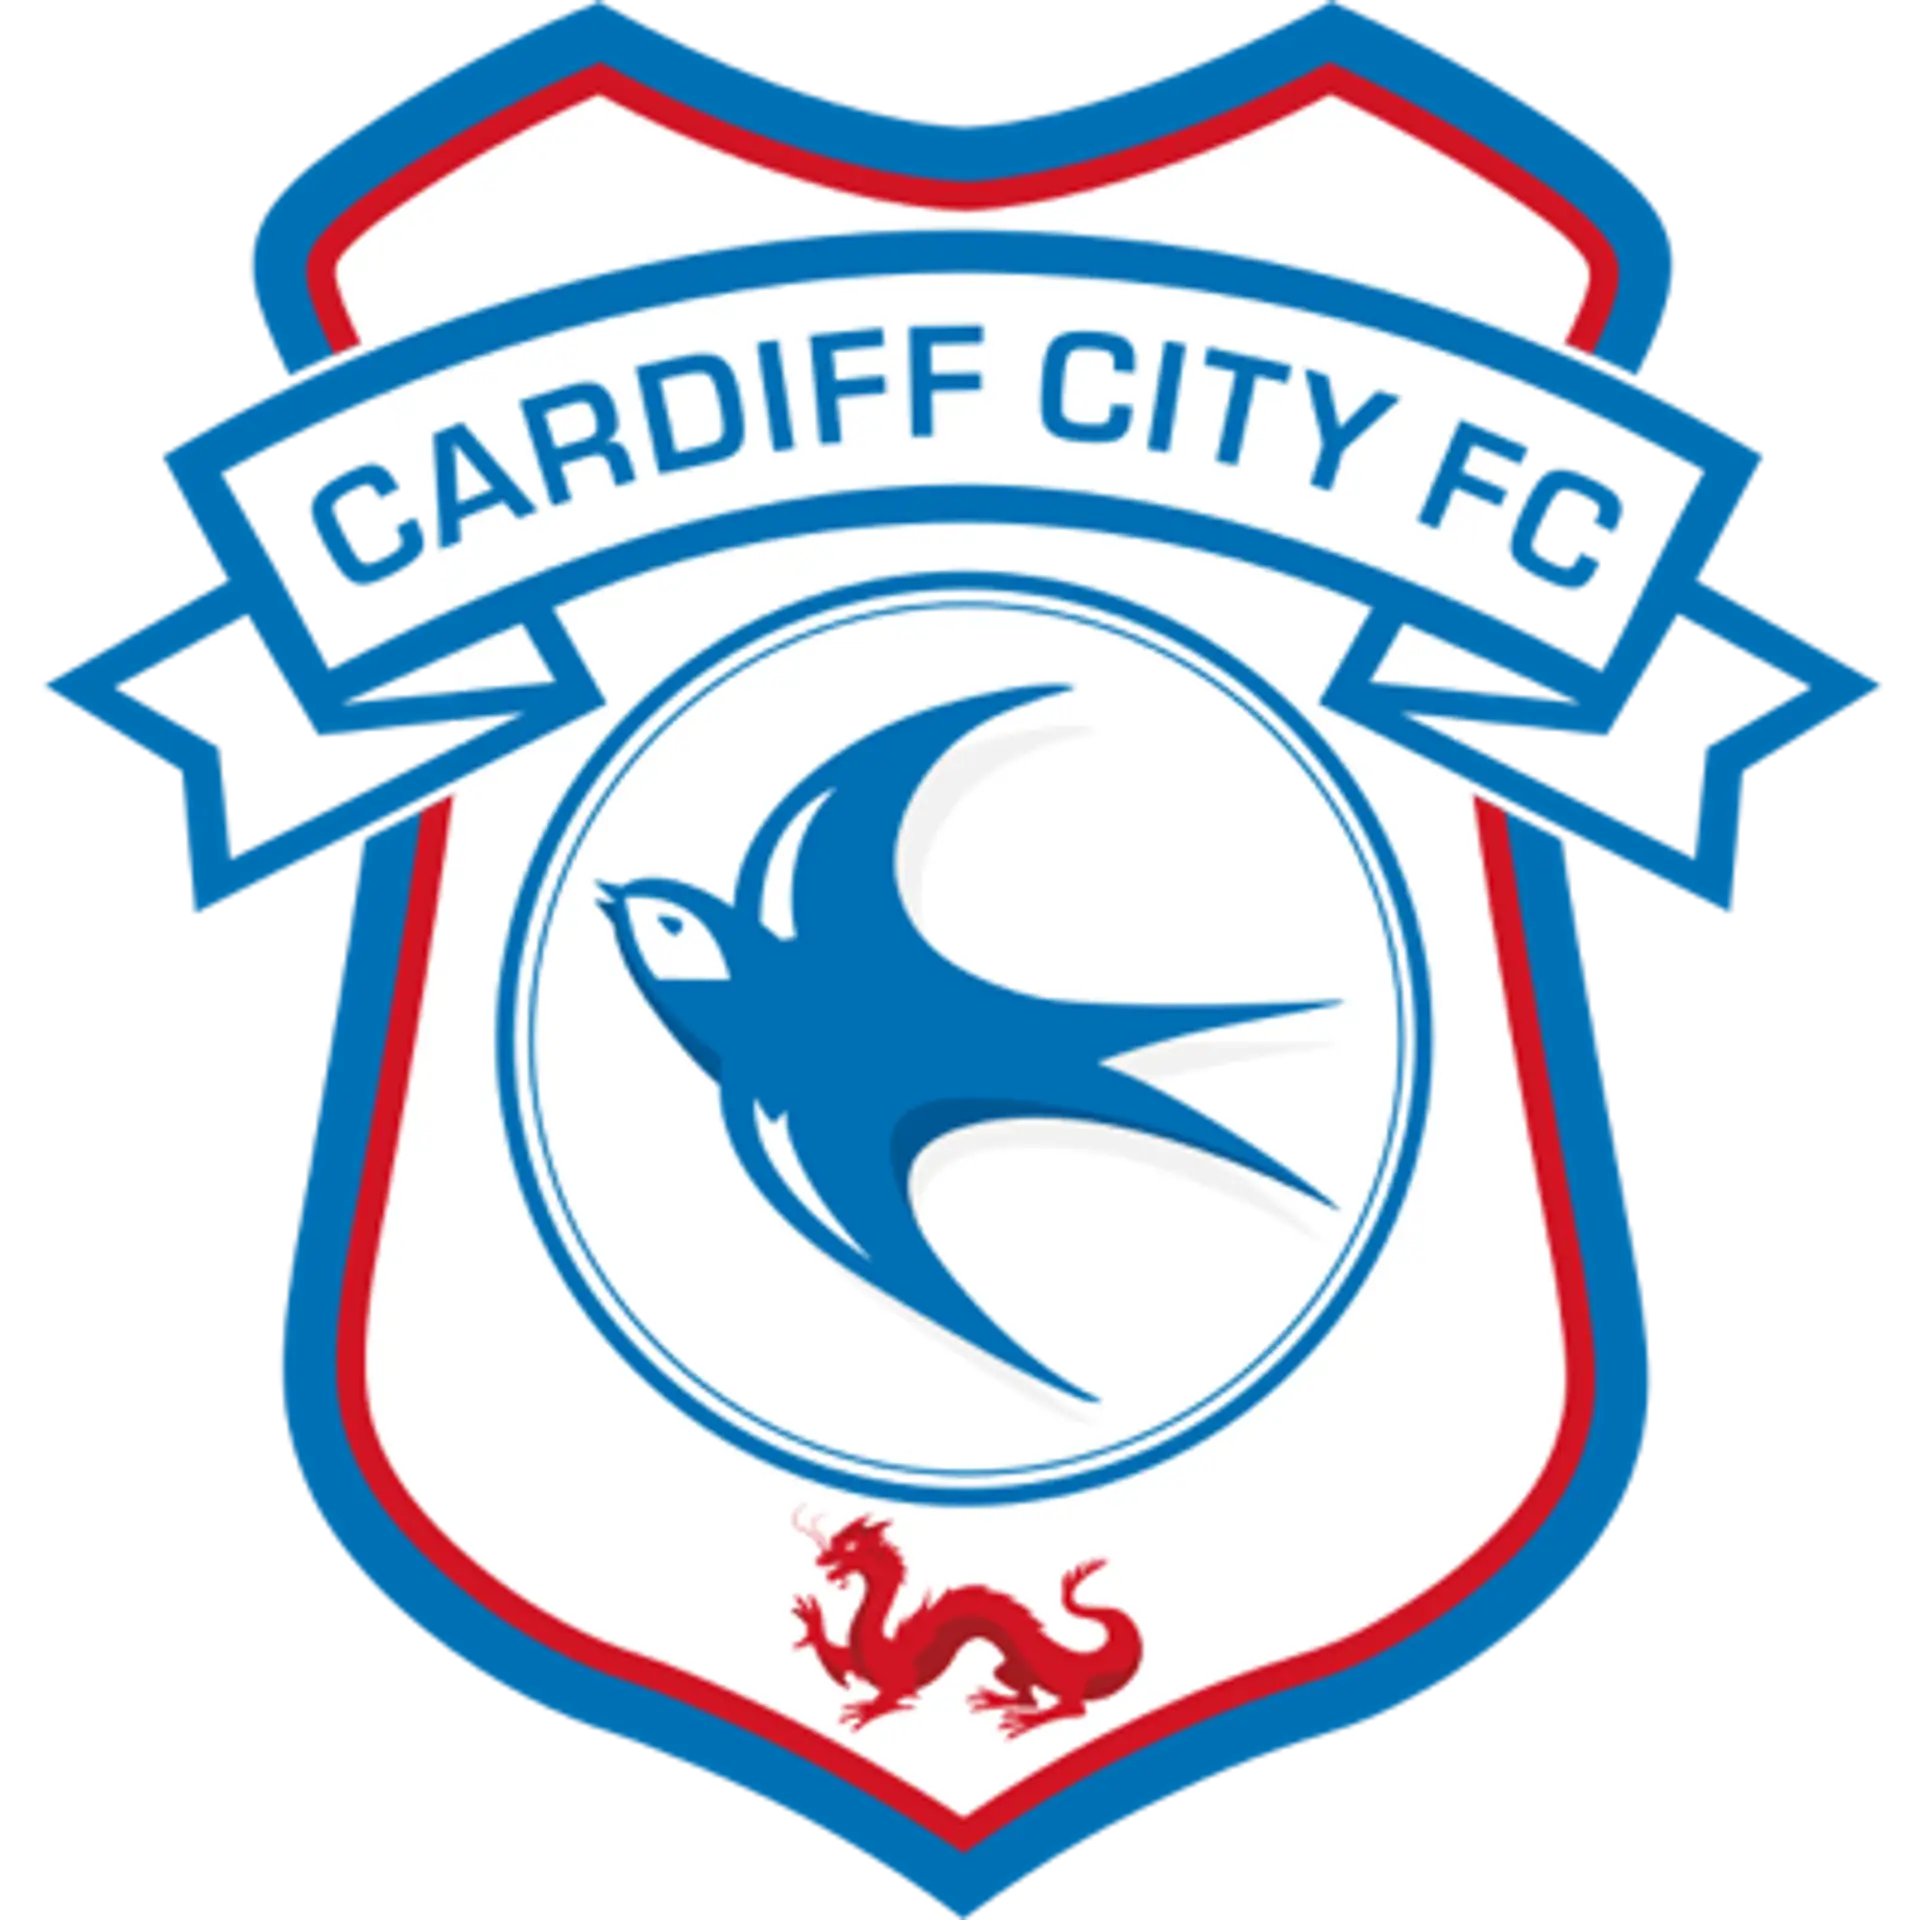 Cardiff City Equipe